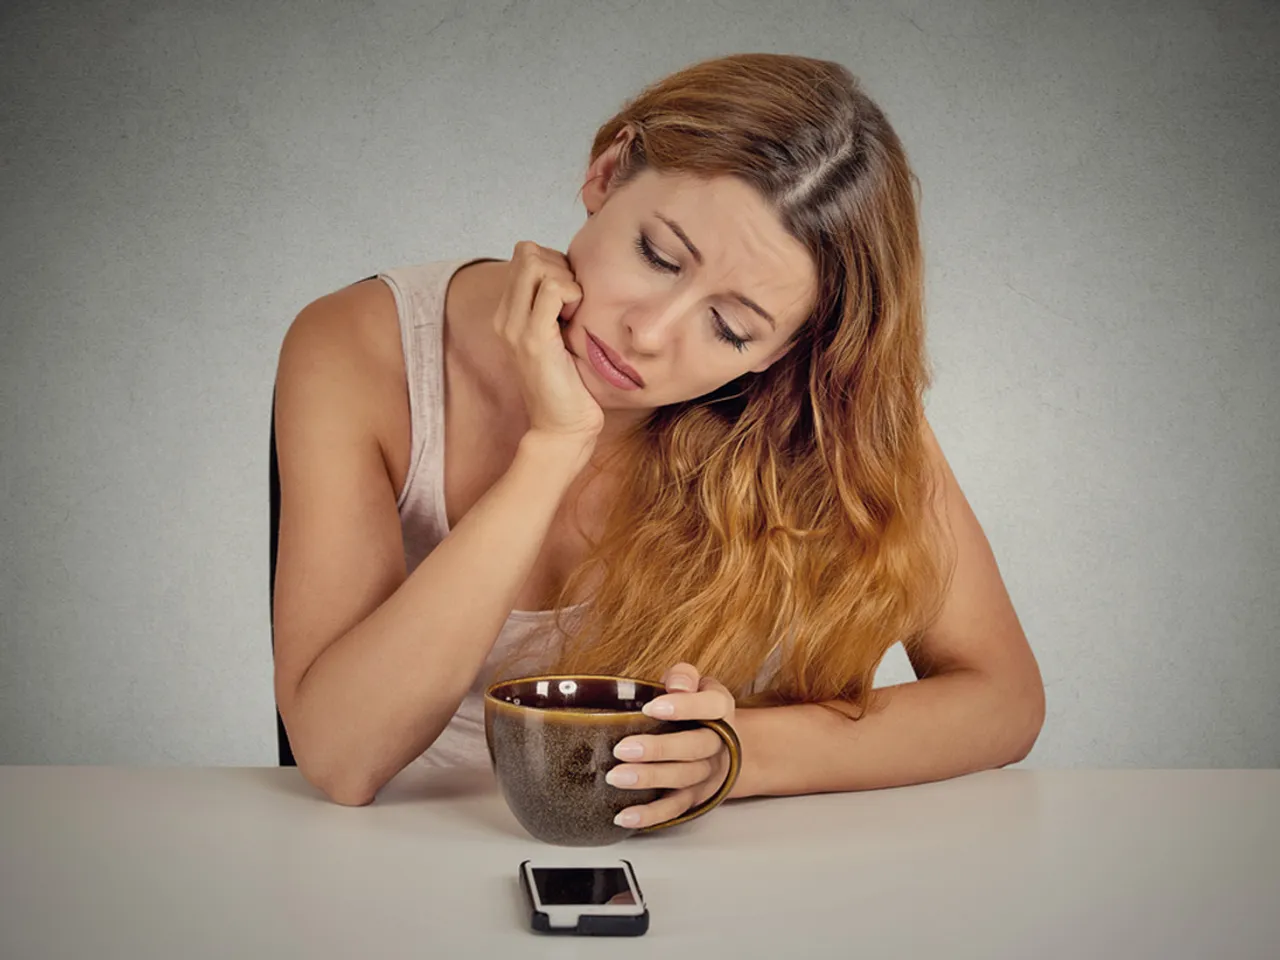 A Sad girl with a coffee mug and an iPhone